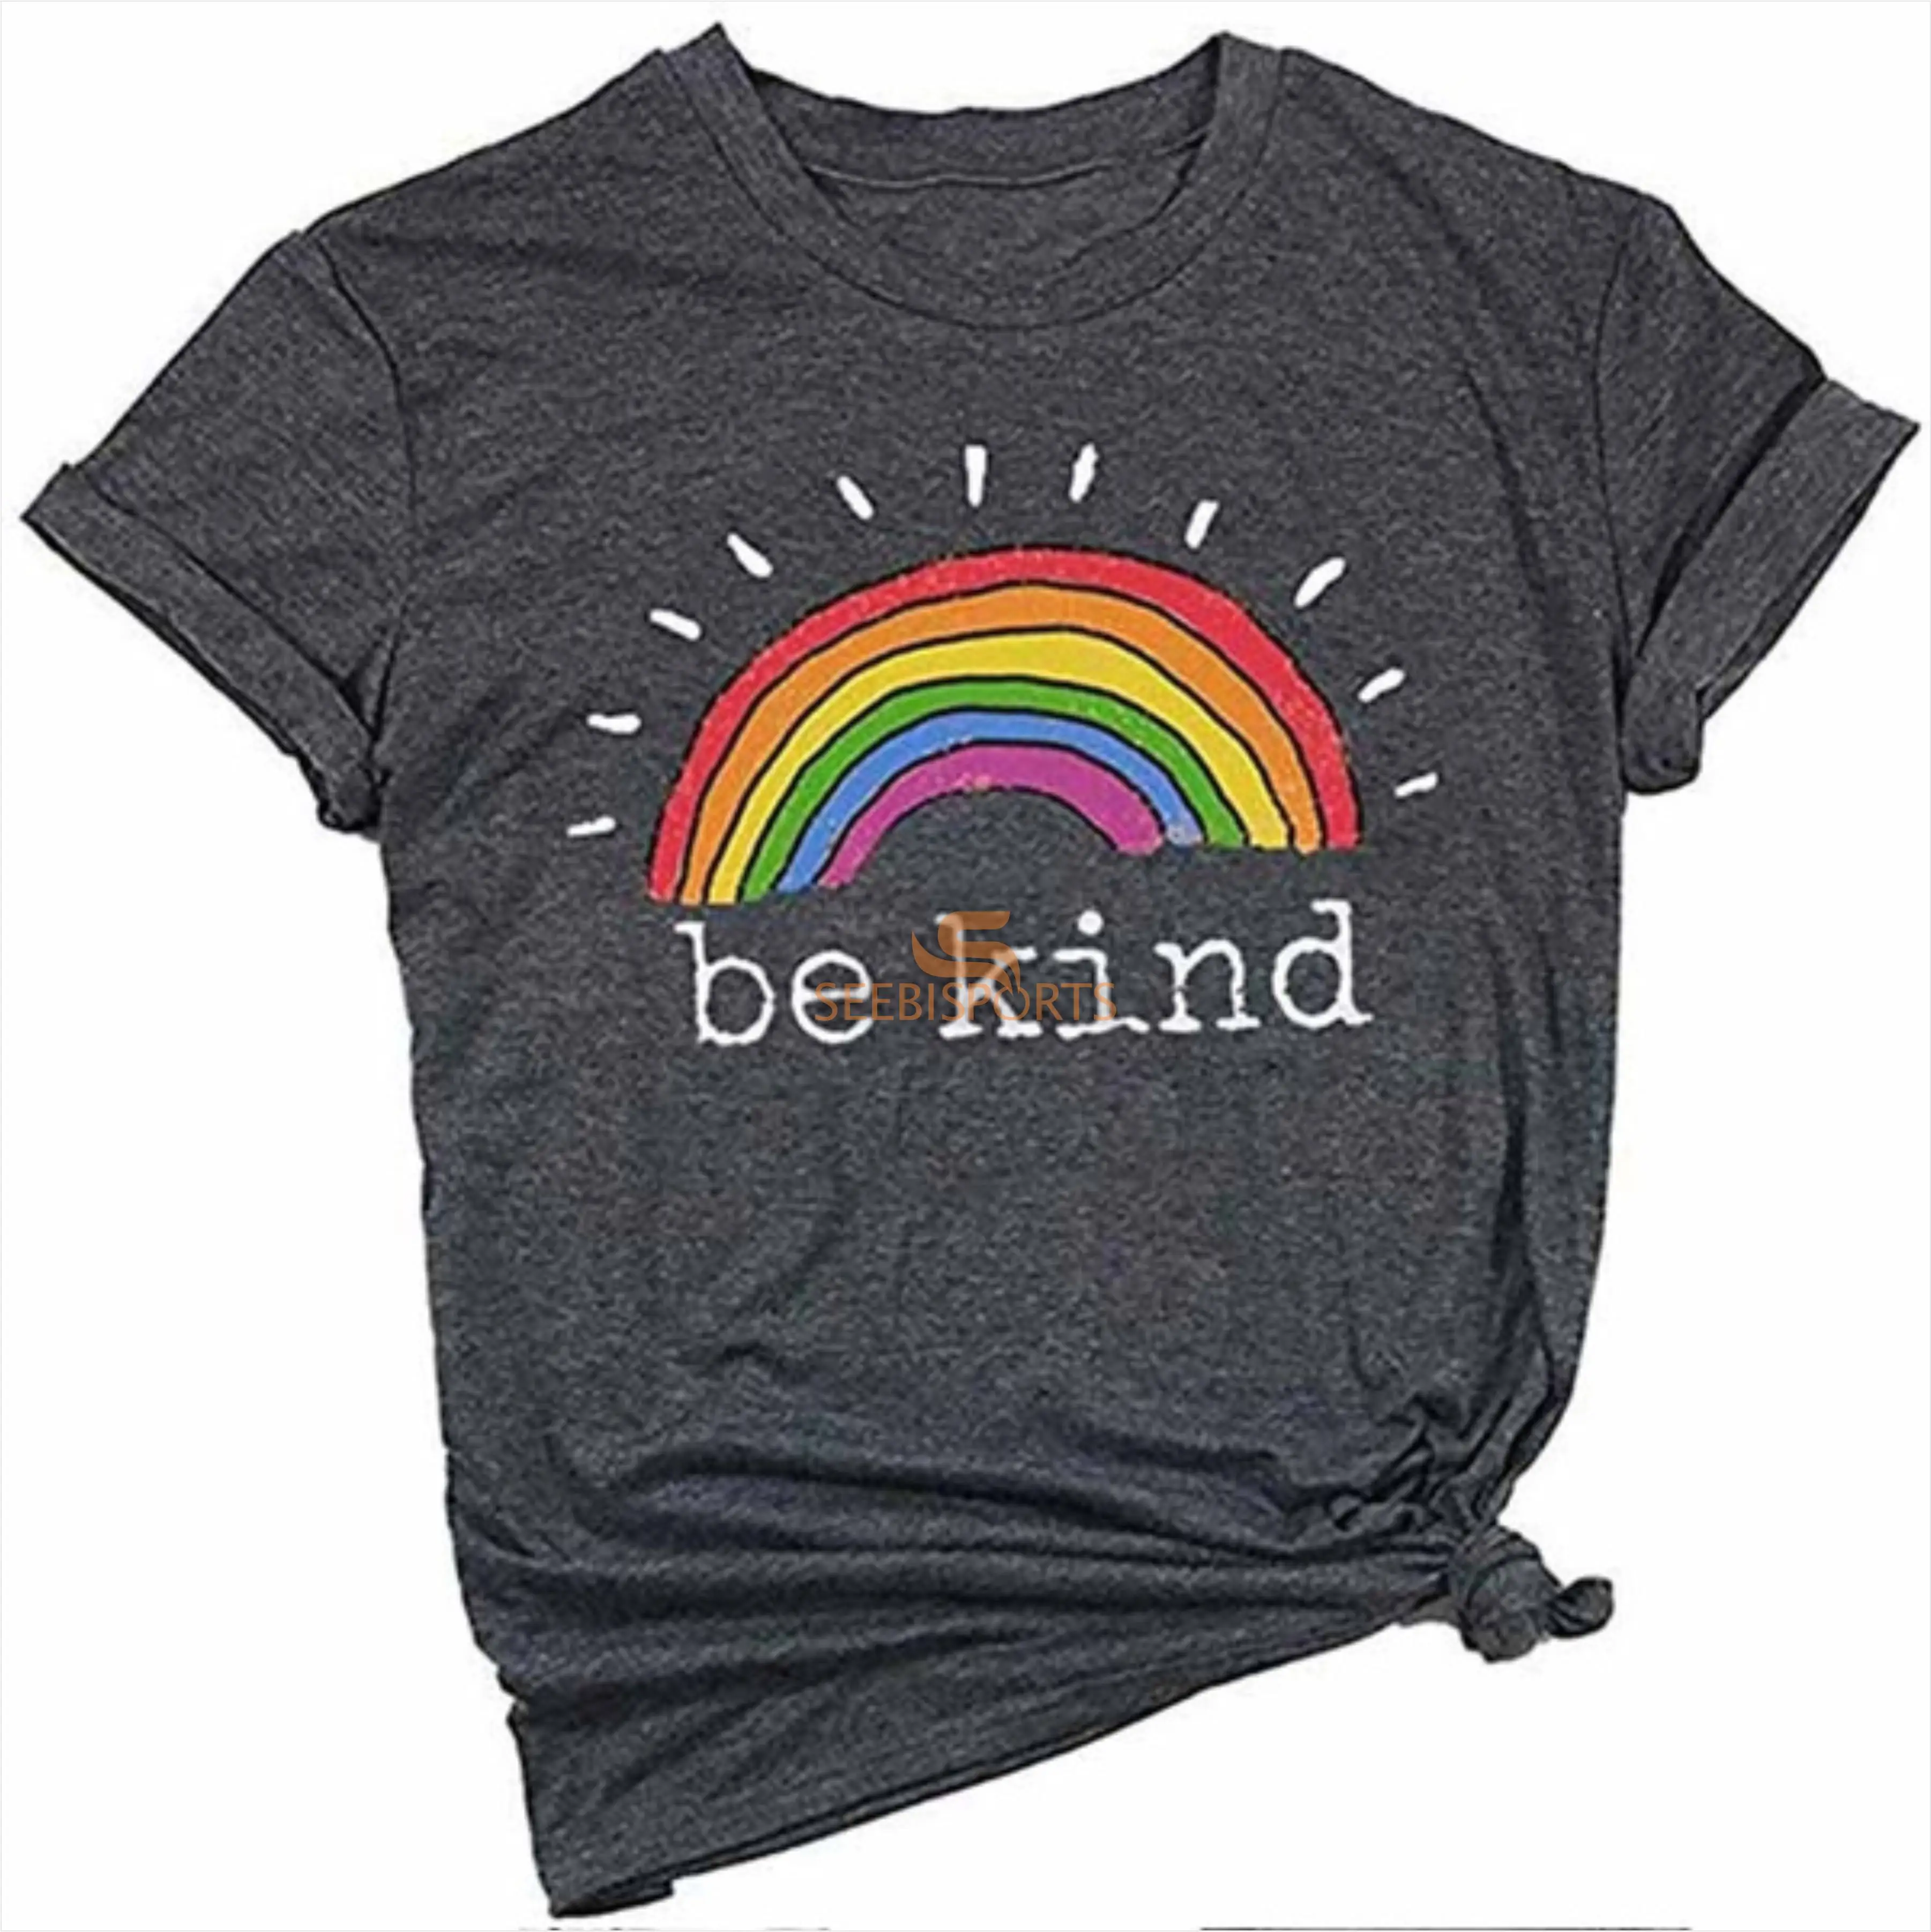 Shirt Women Rainbow Print Graphic Tee Funny Inspirational Saying Casual Tops T Shirts